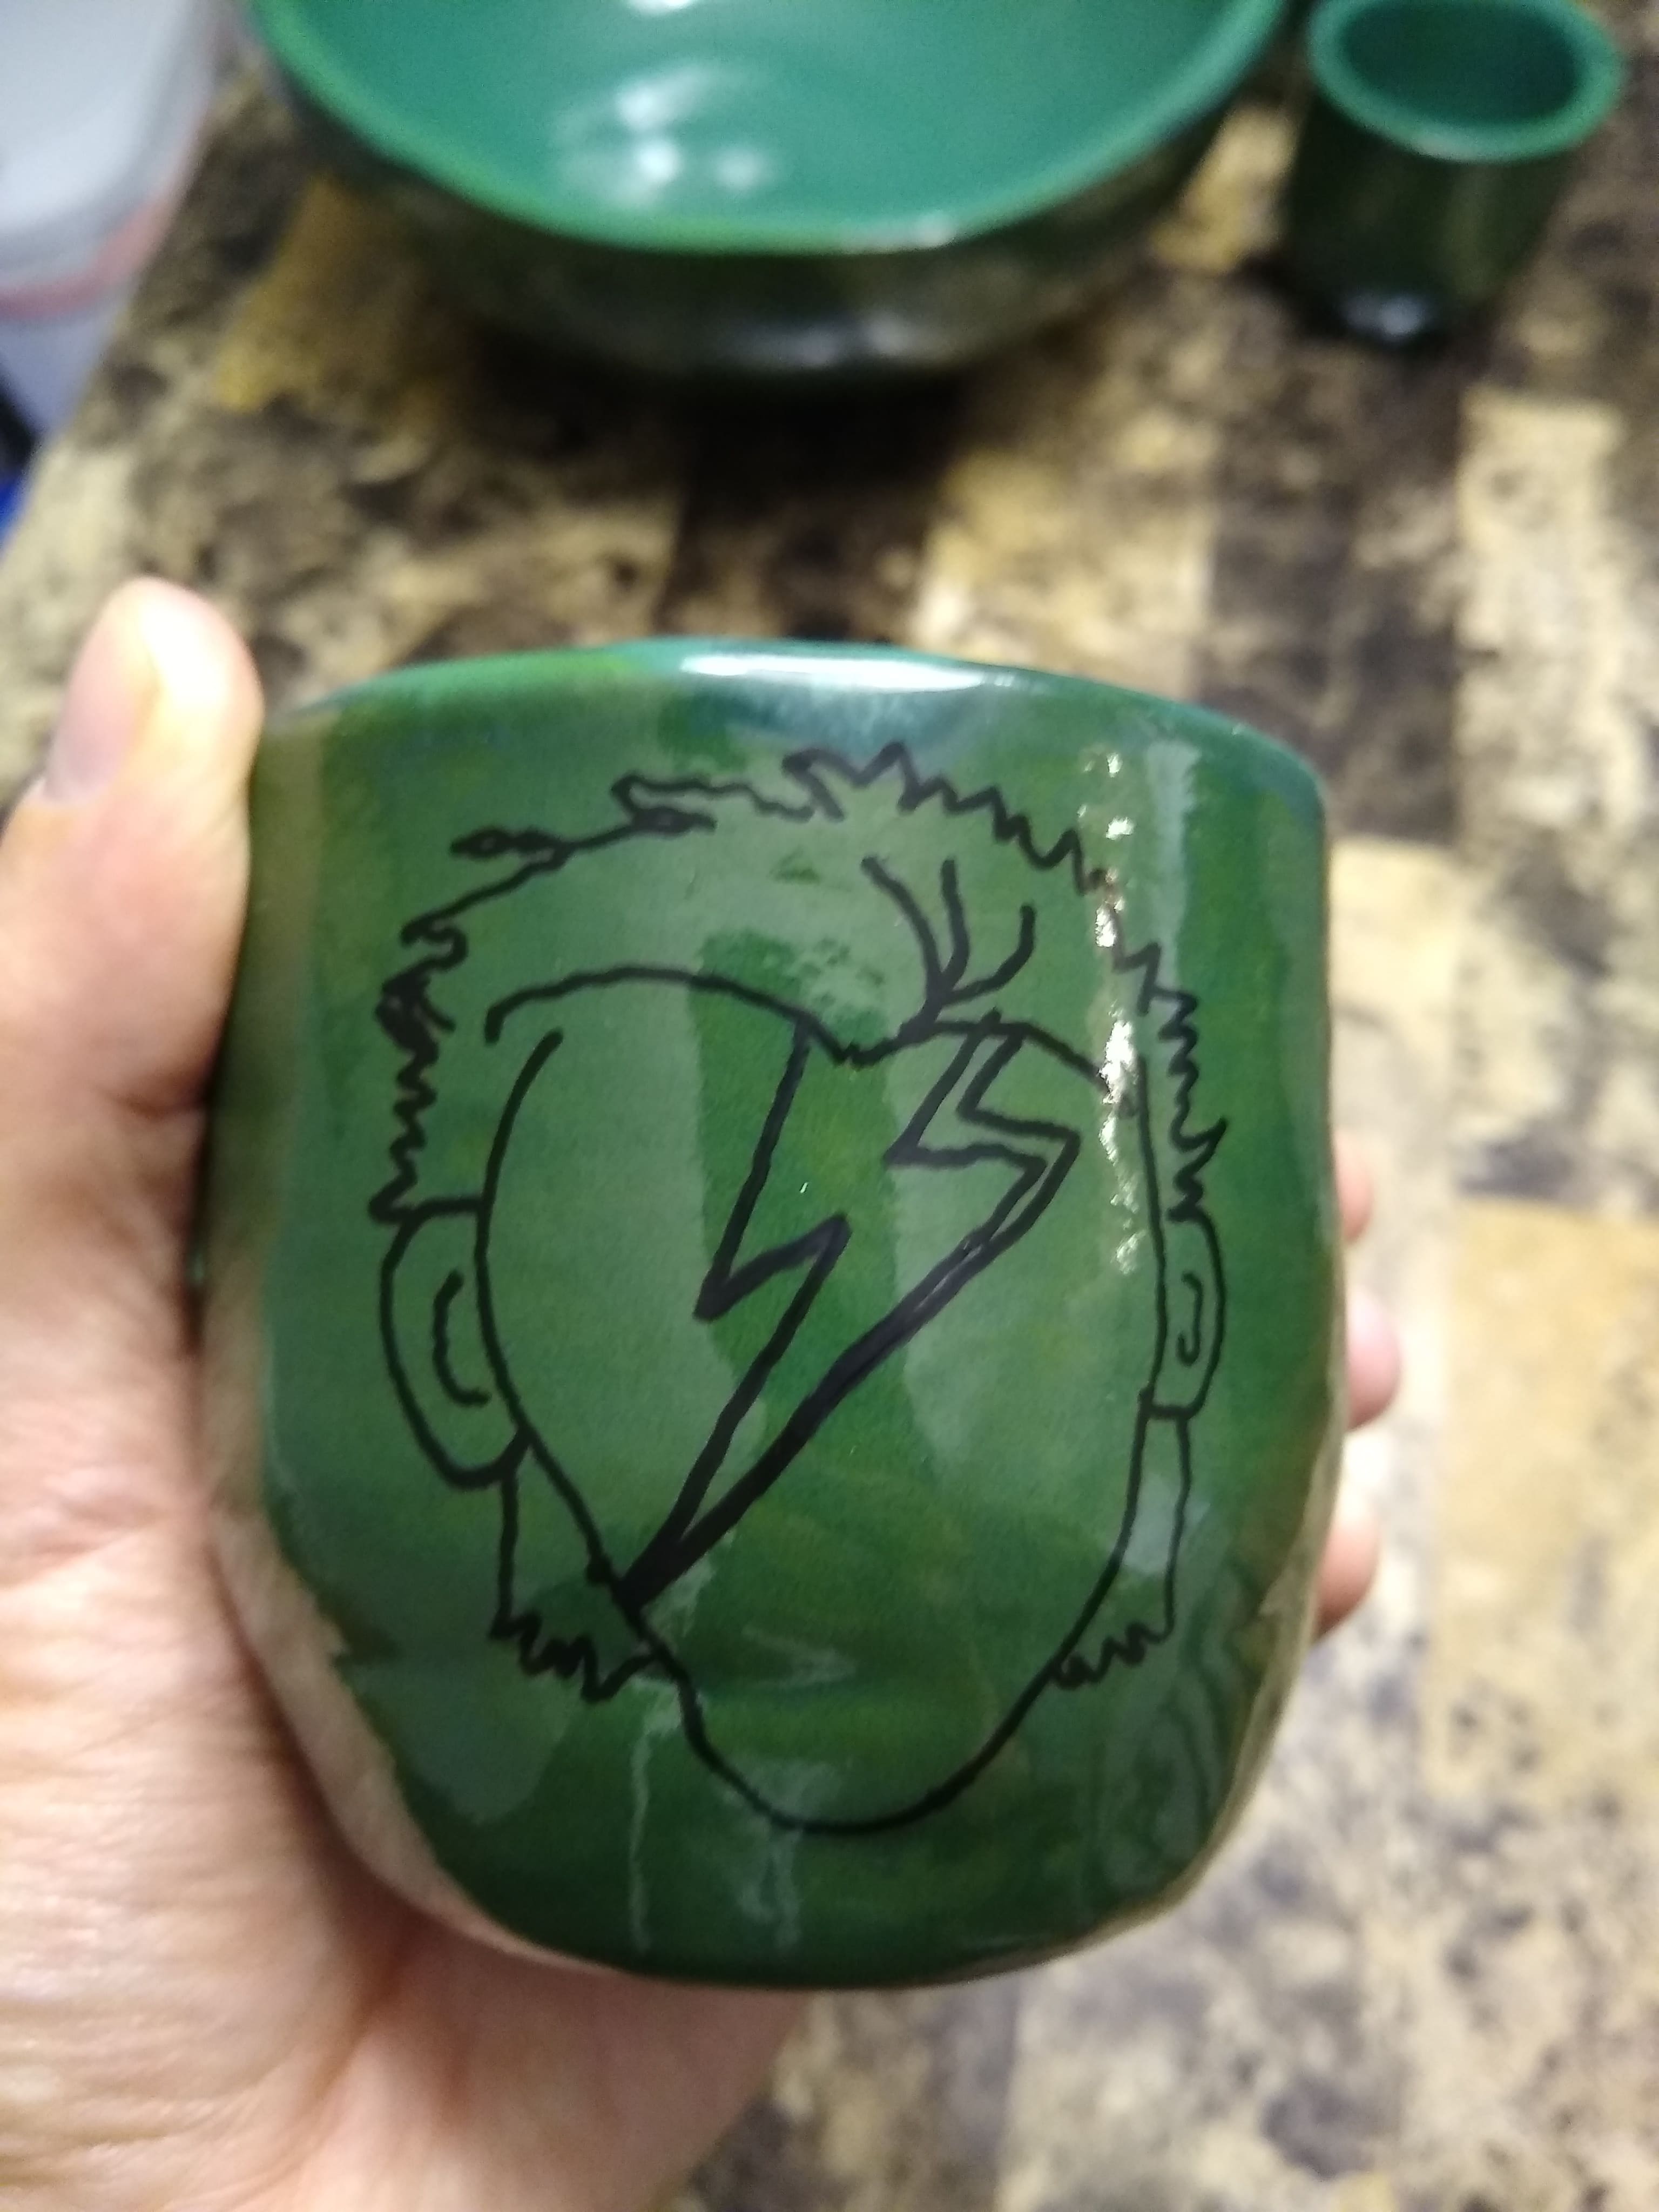 mug with Bowie motif